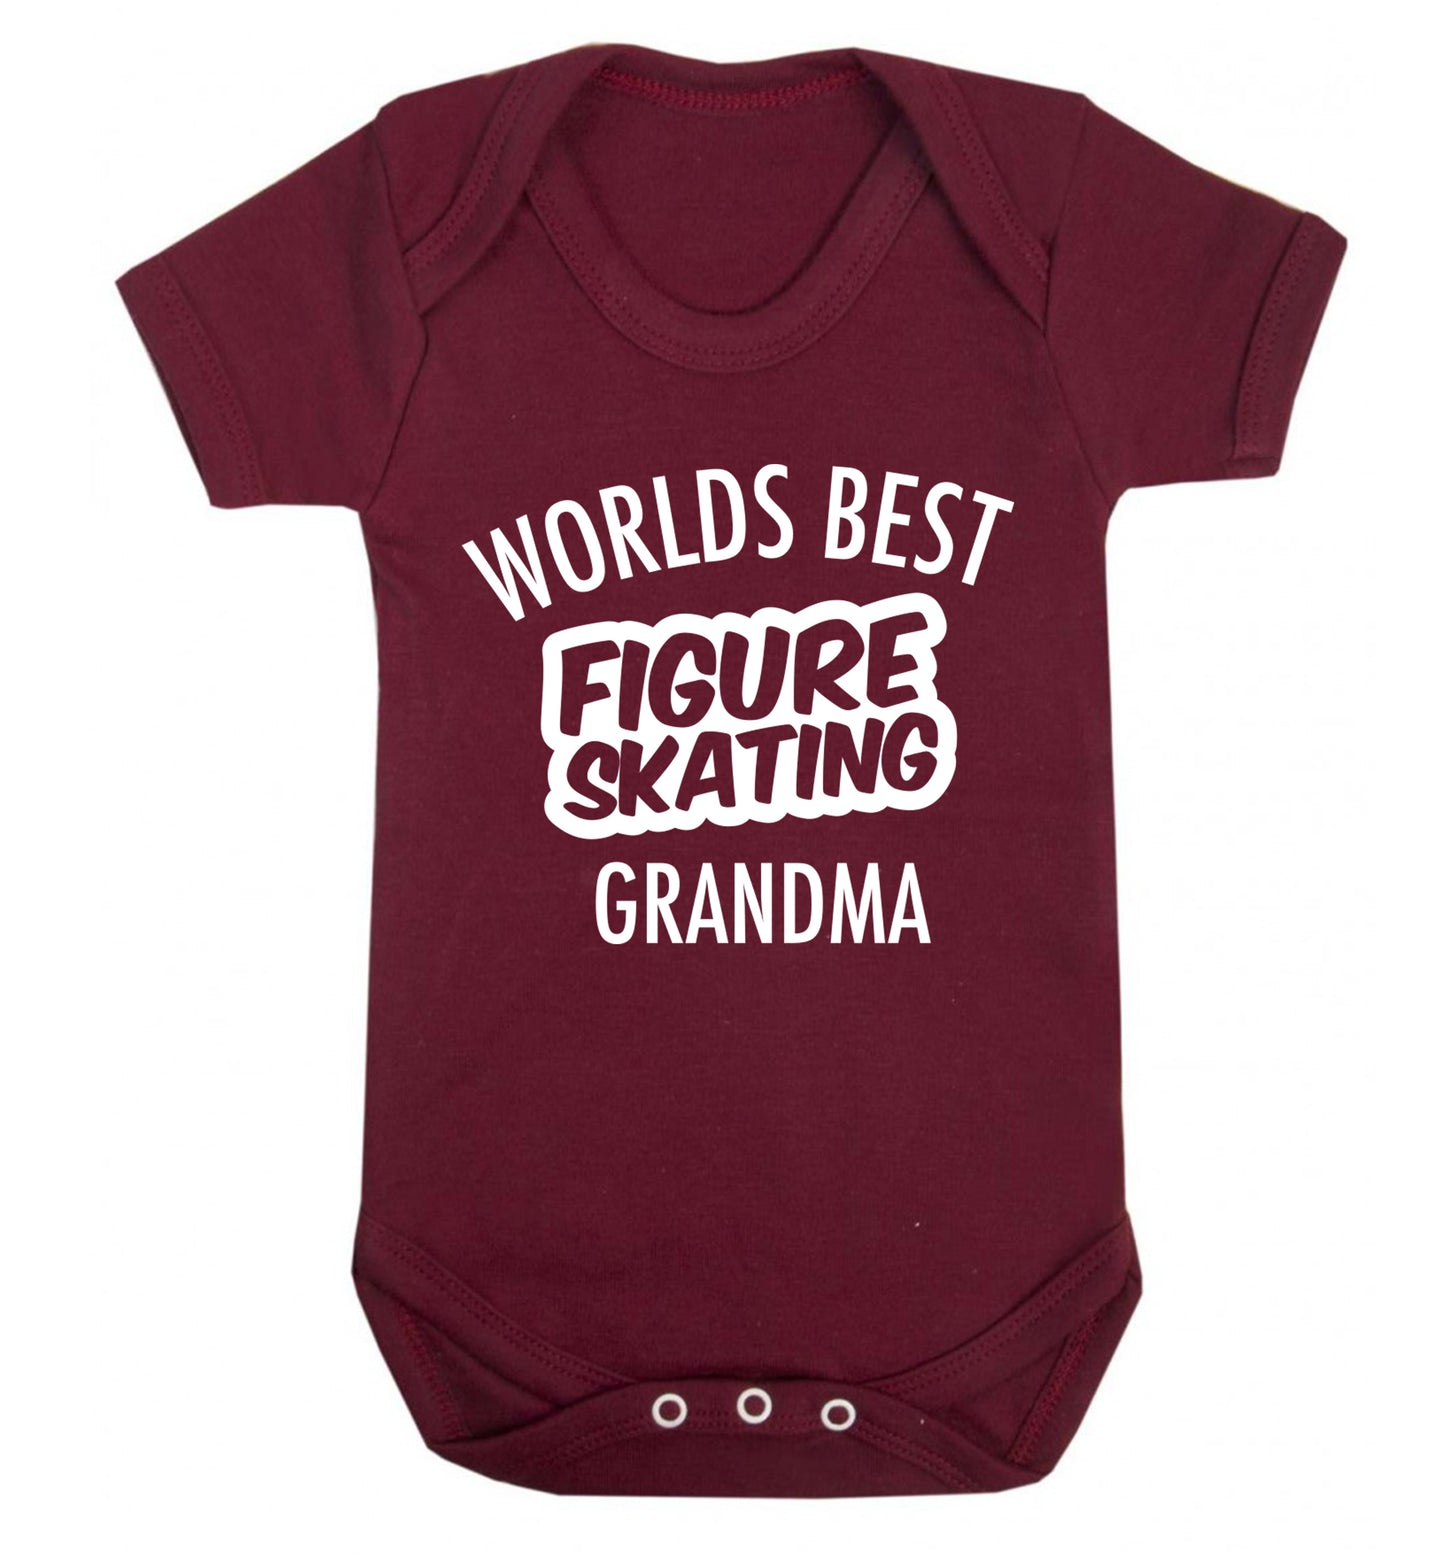 Worlds best figure skating grandma Baby Vest maroon 18-24 months